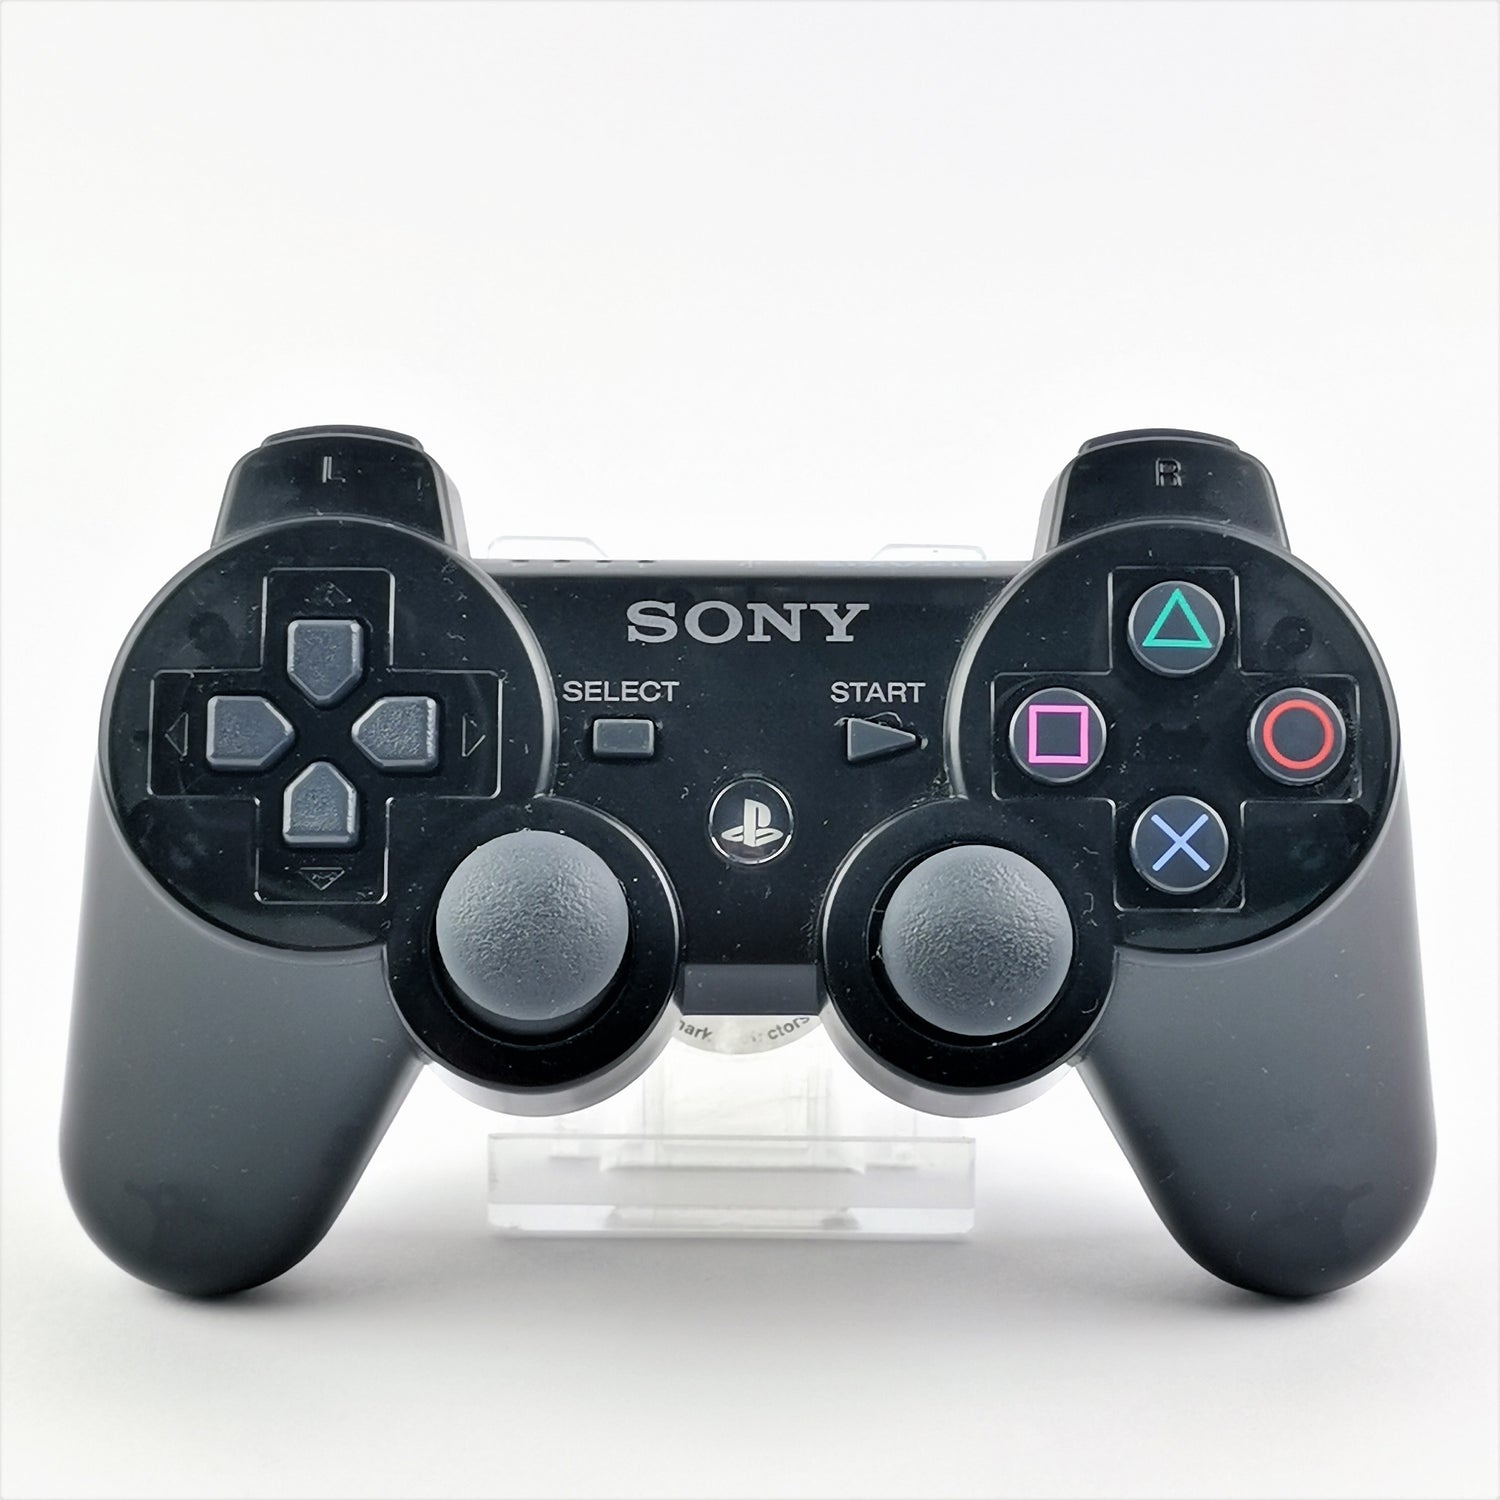 Sony Playstation 3 Gamepad: Original PS3 Dualshock Controller Black Black PS3